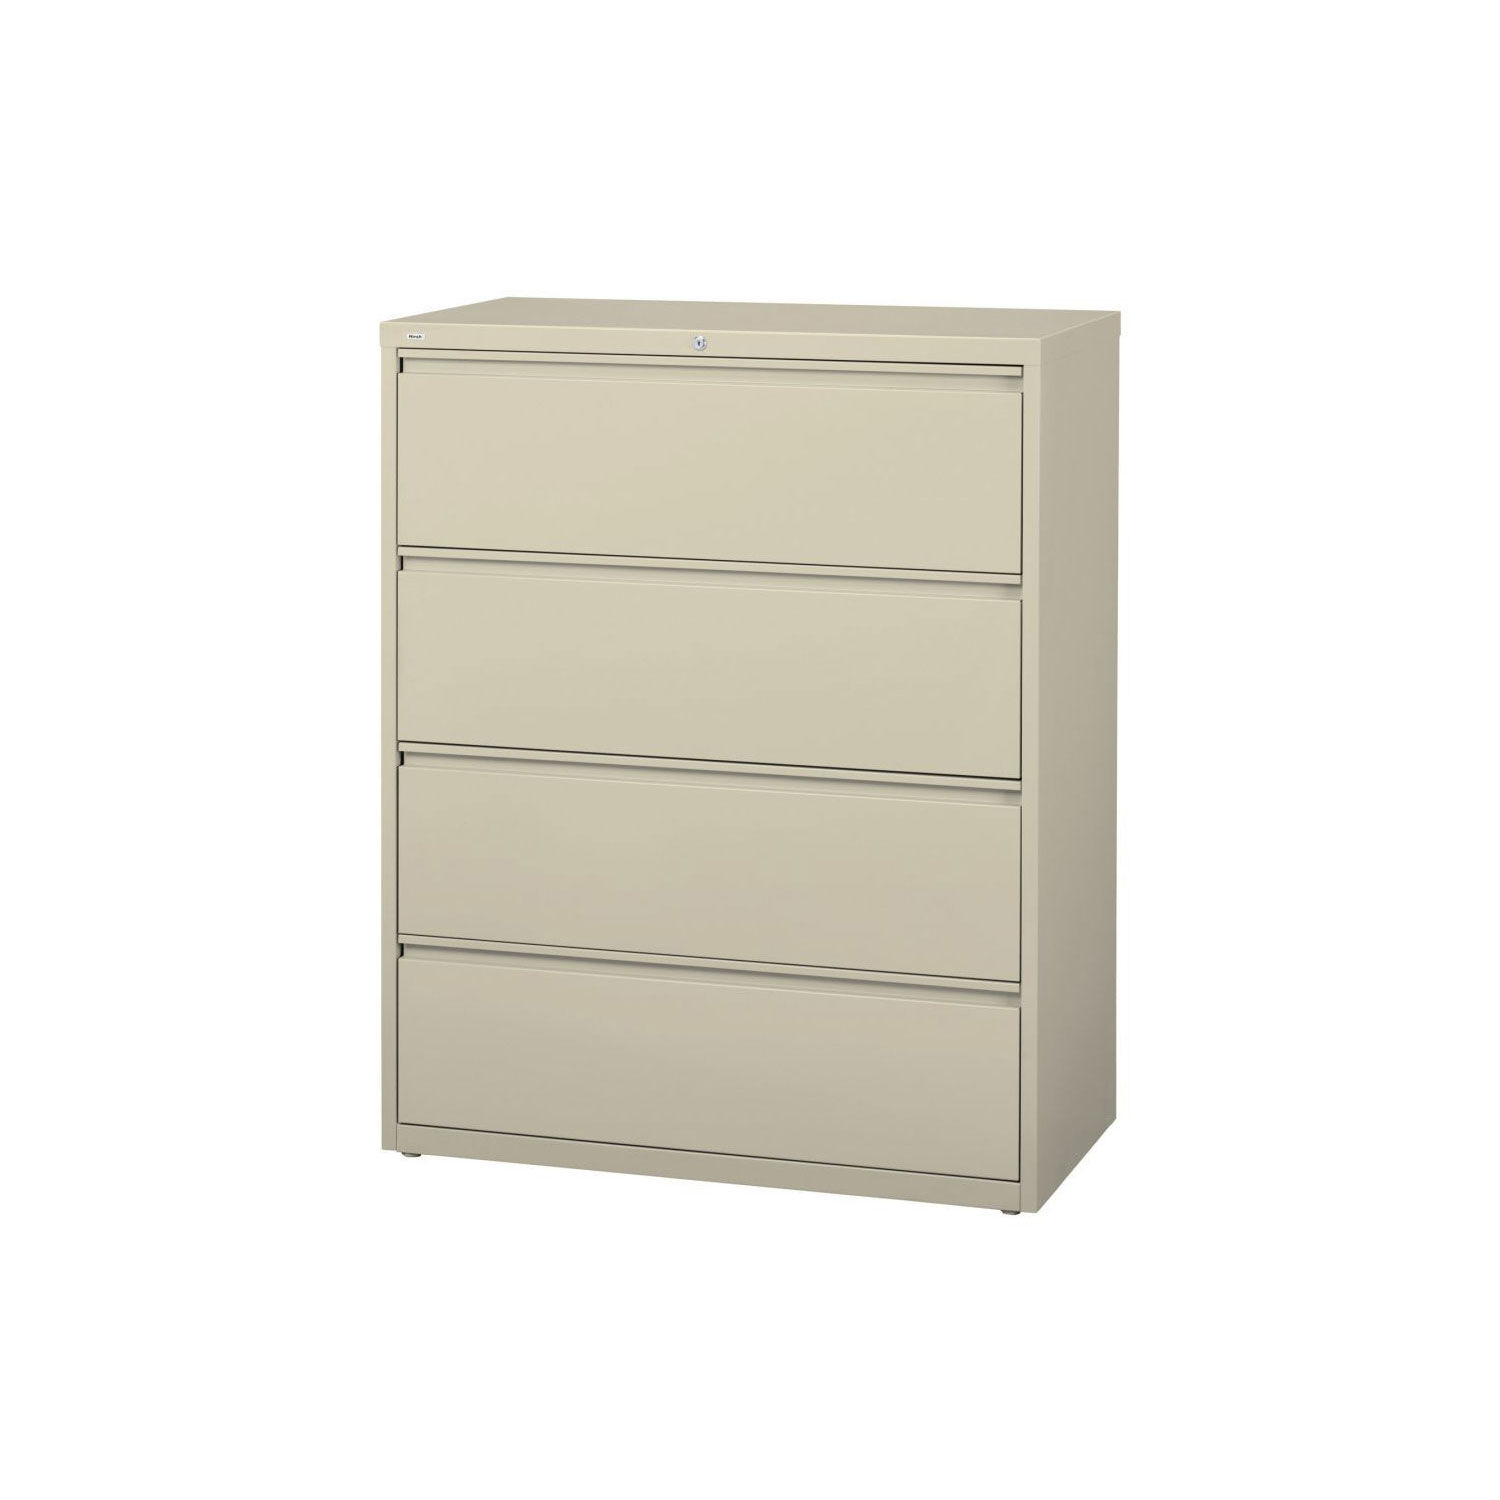 Lorell Llr60444 4 Drawer Lateral File Cabinet 36w X 18 58d X 52 regarding dimensions 1500 X 1500